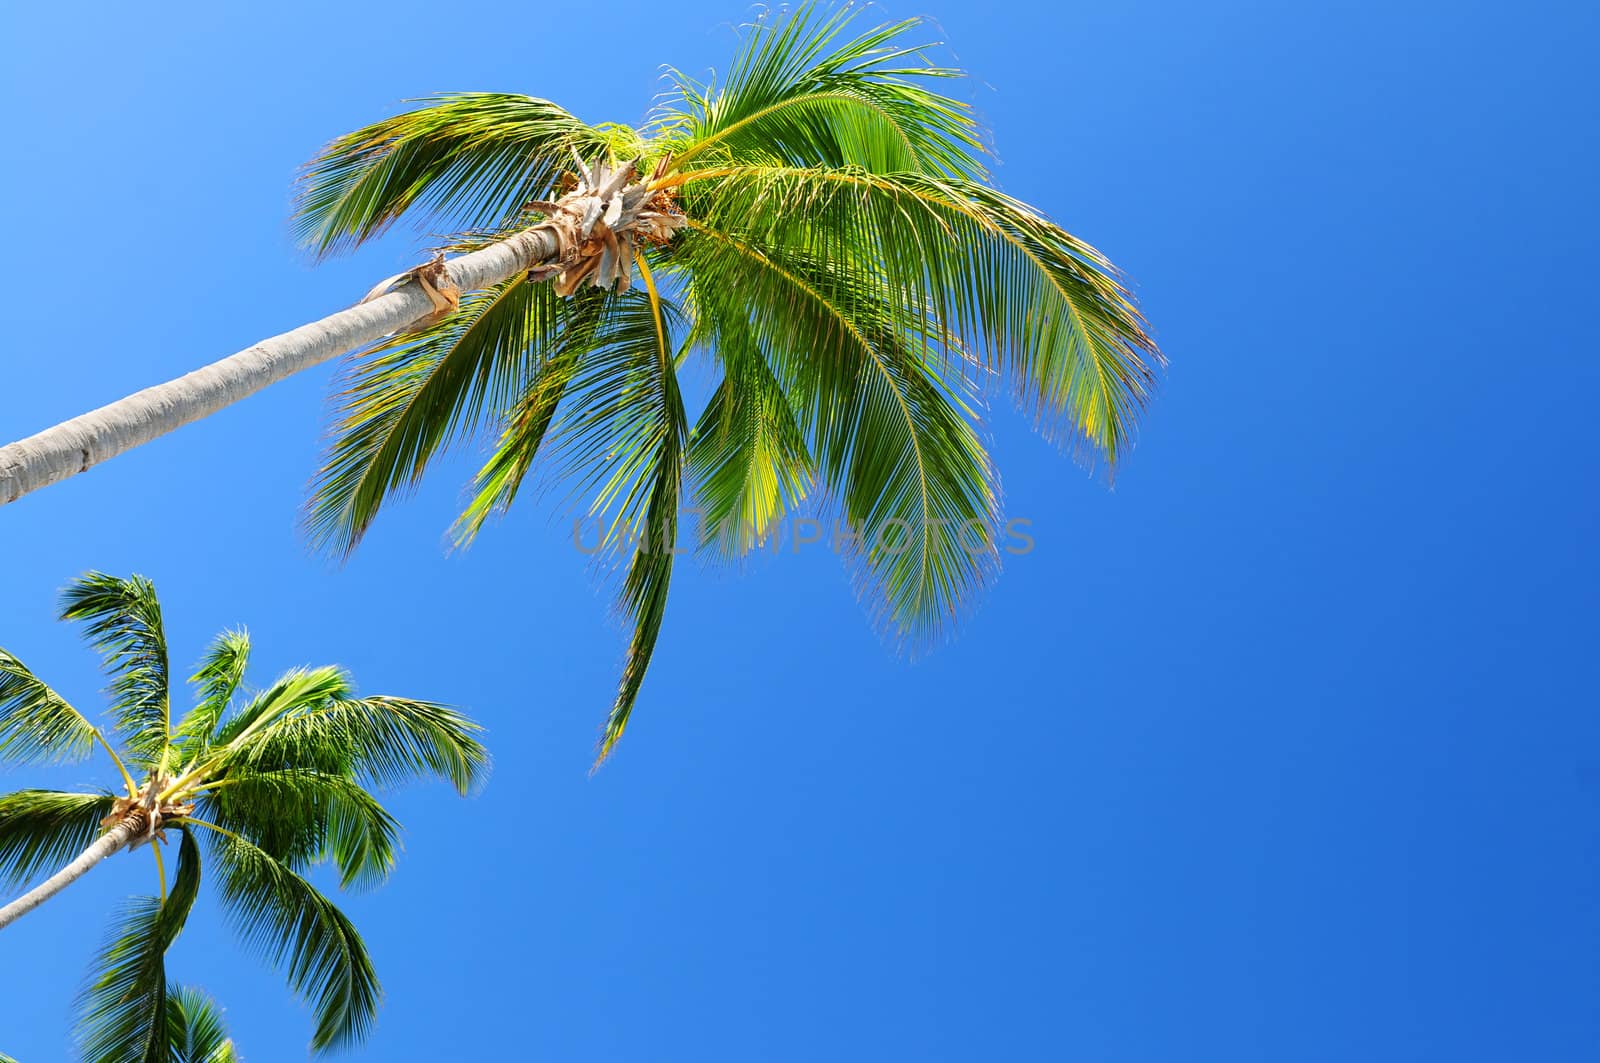 Palms on blue sky background by elenathewise